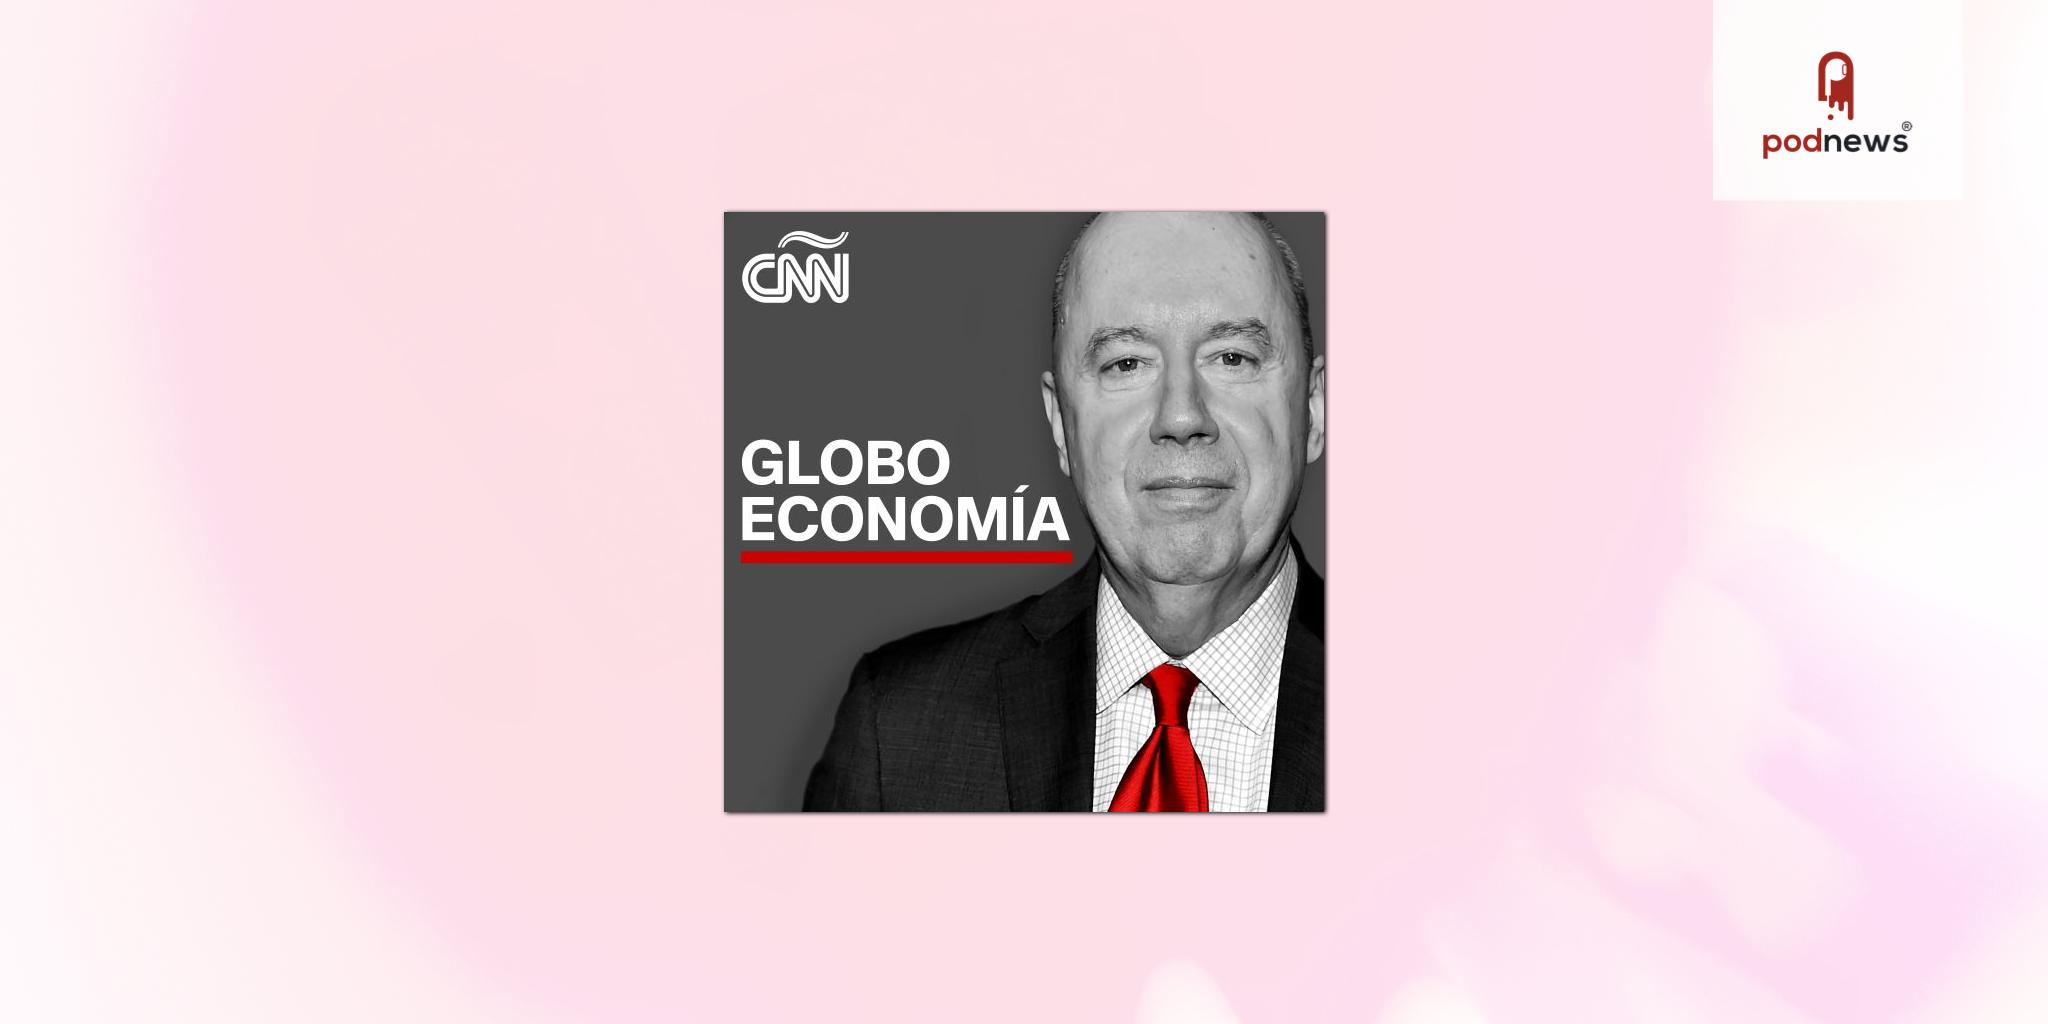 CNN en Español's Podcast roster adds GloboEconomia